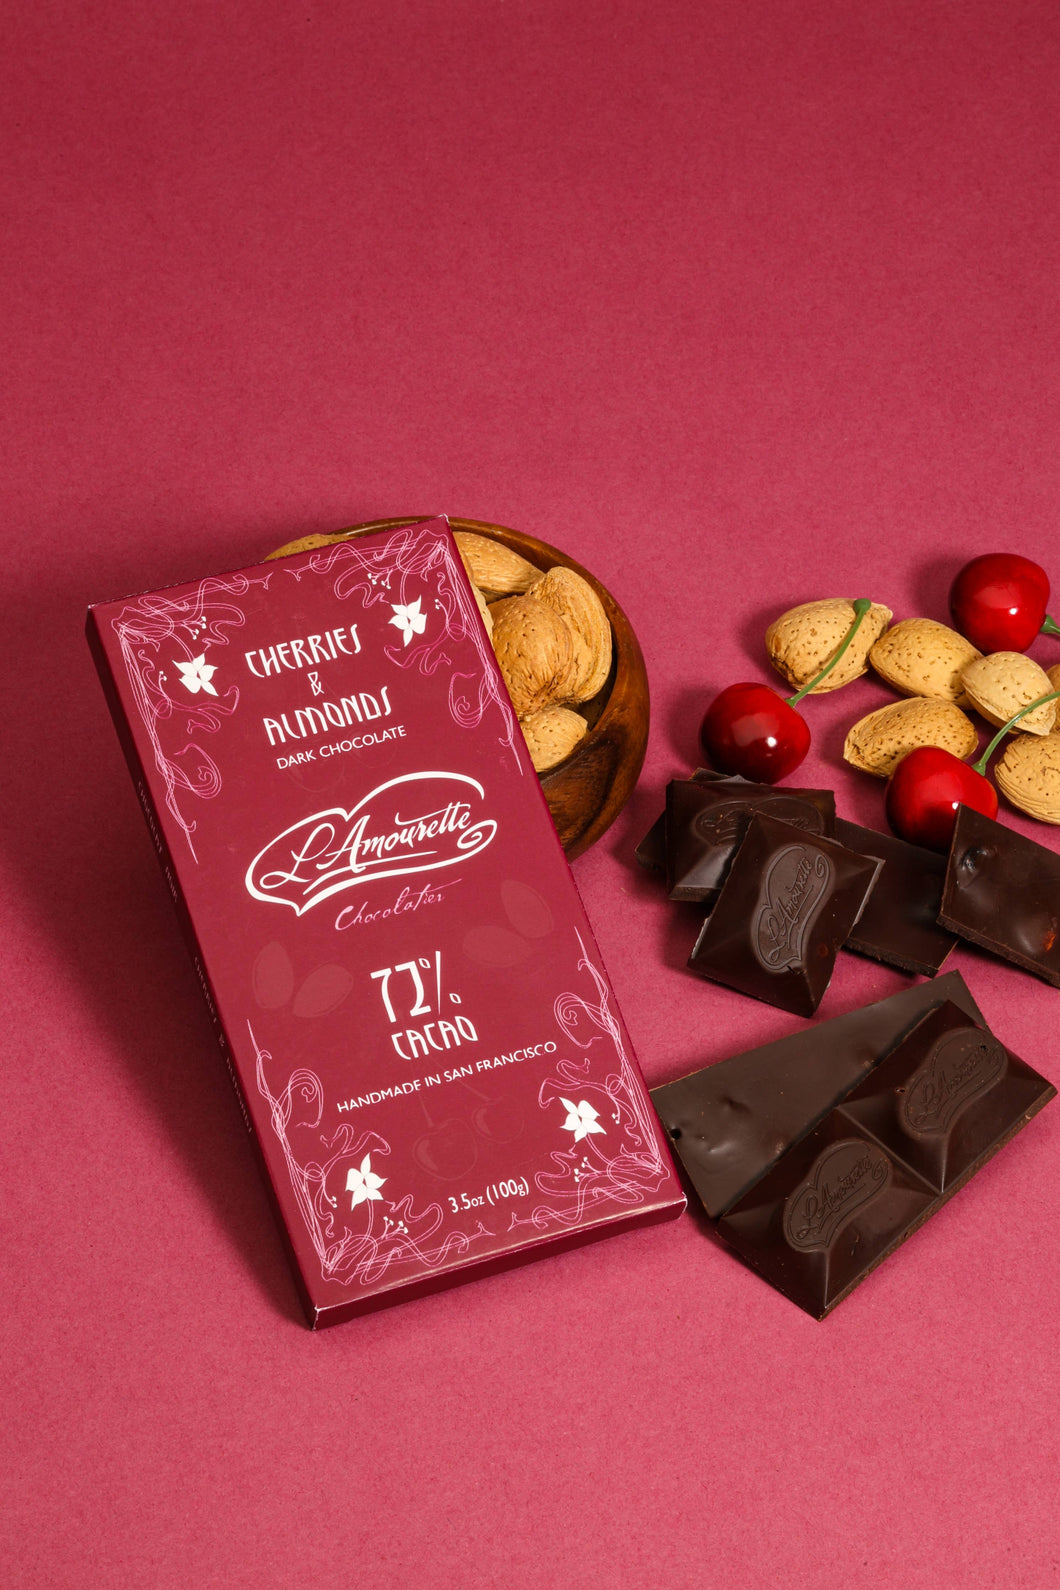 L'Amourette Chocolat - 72% Dark Chocolate with Cherries & Salted Almonds